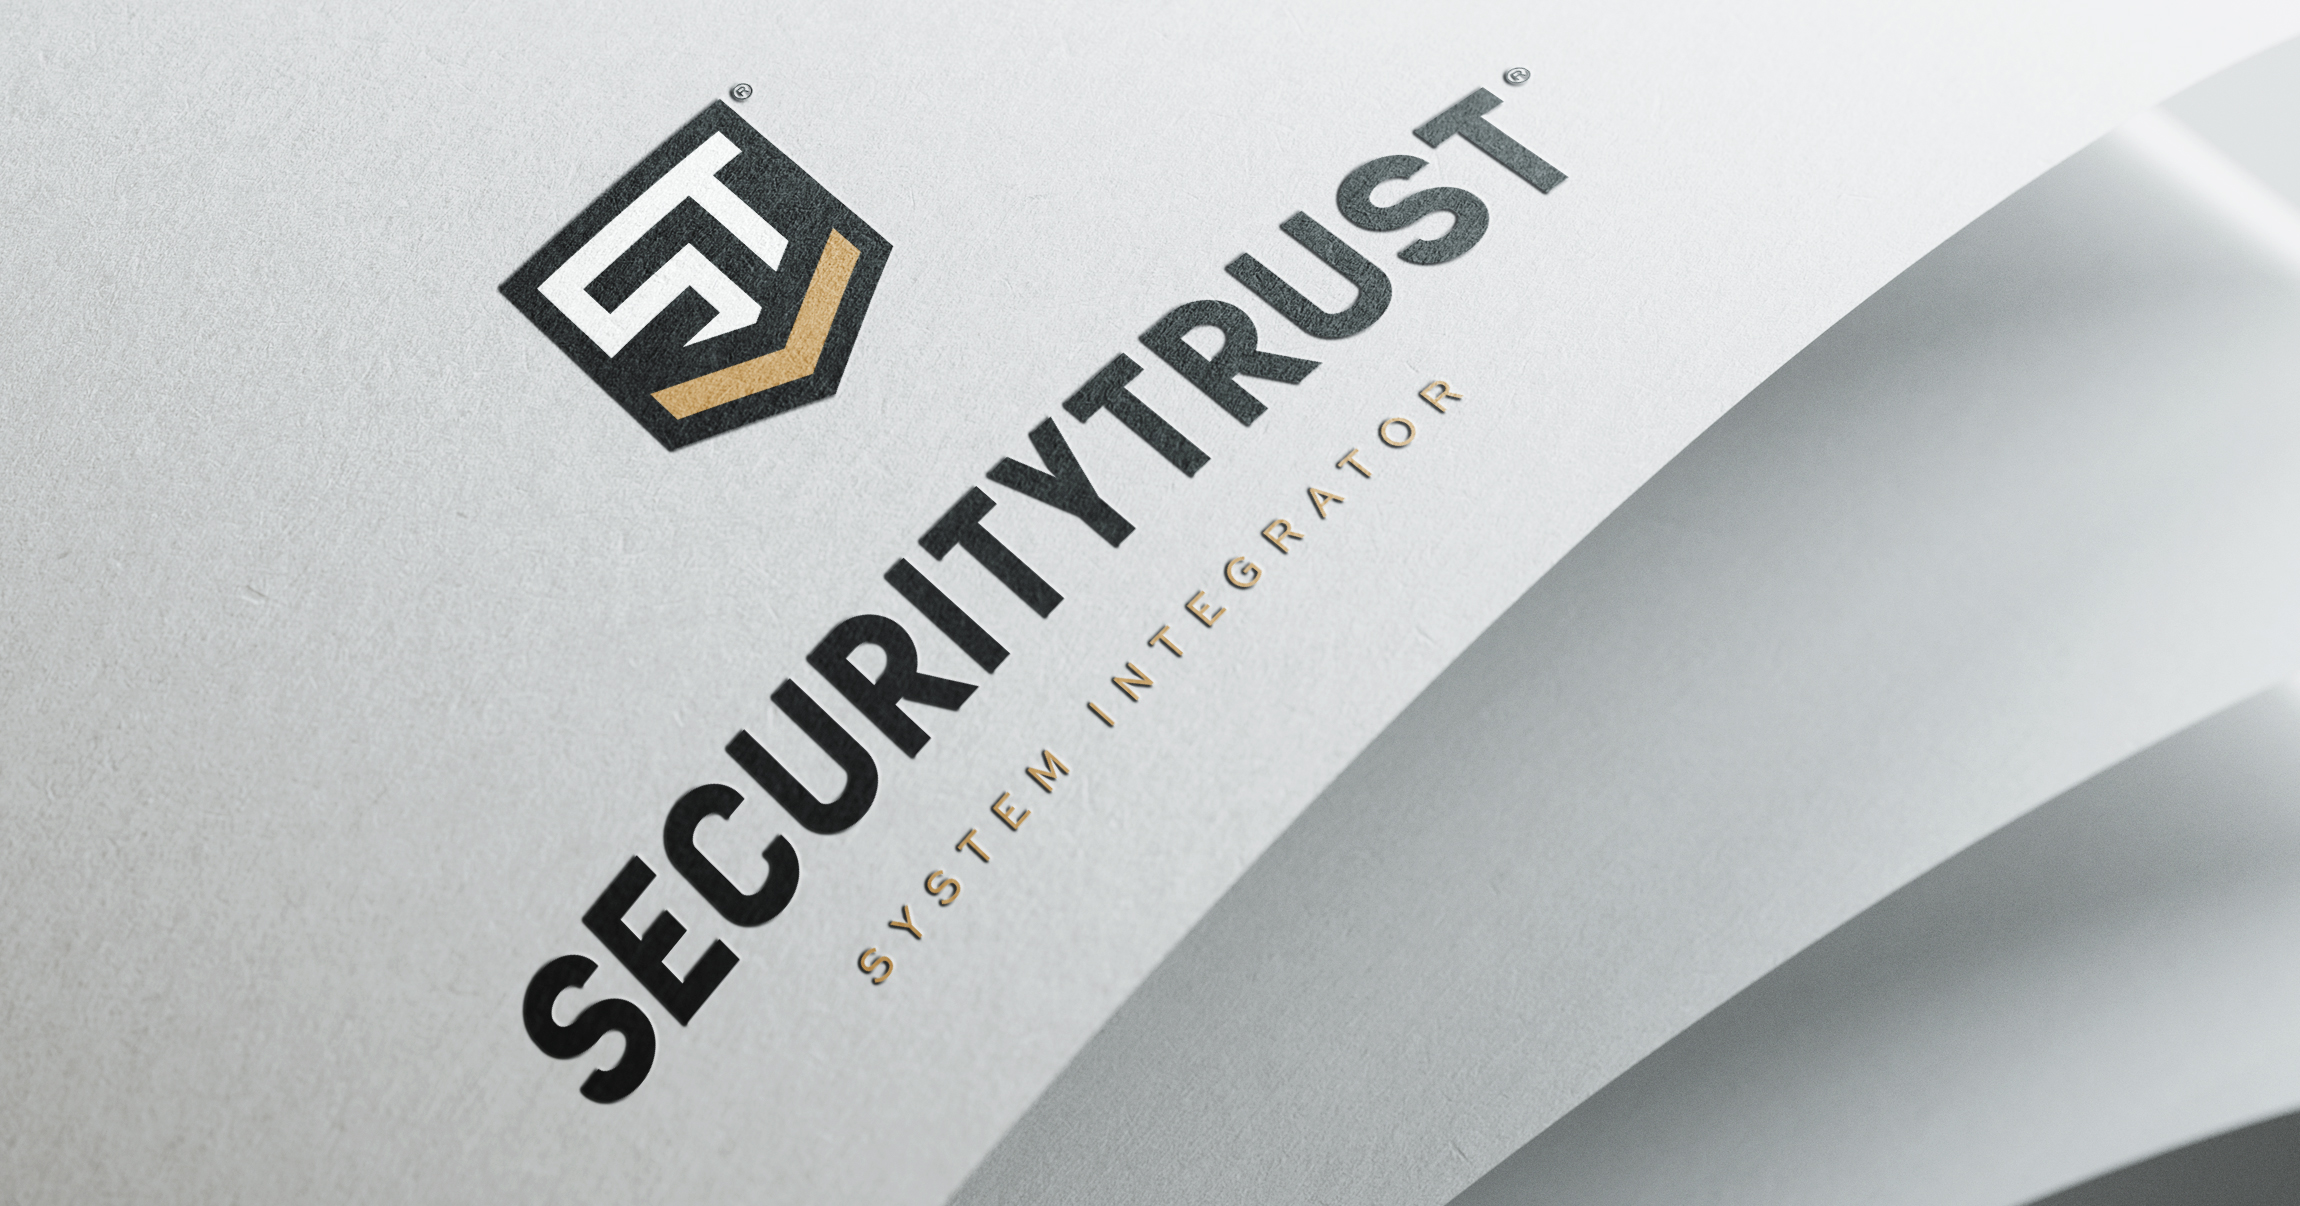 Security Trust